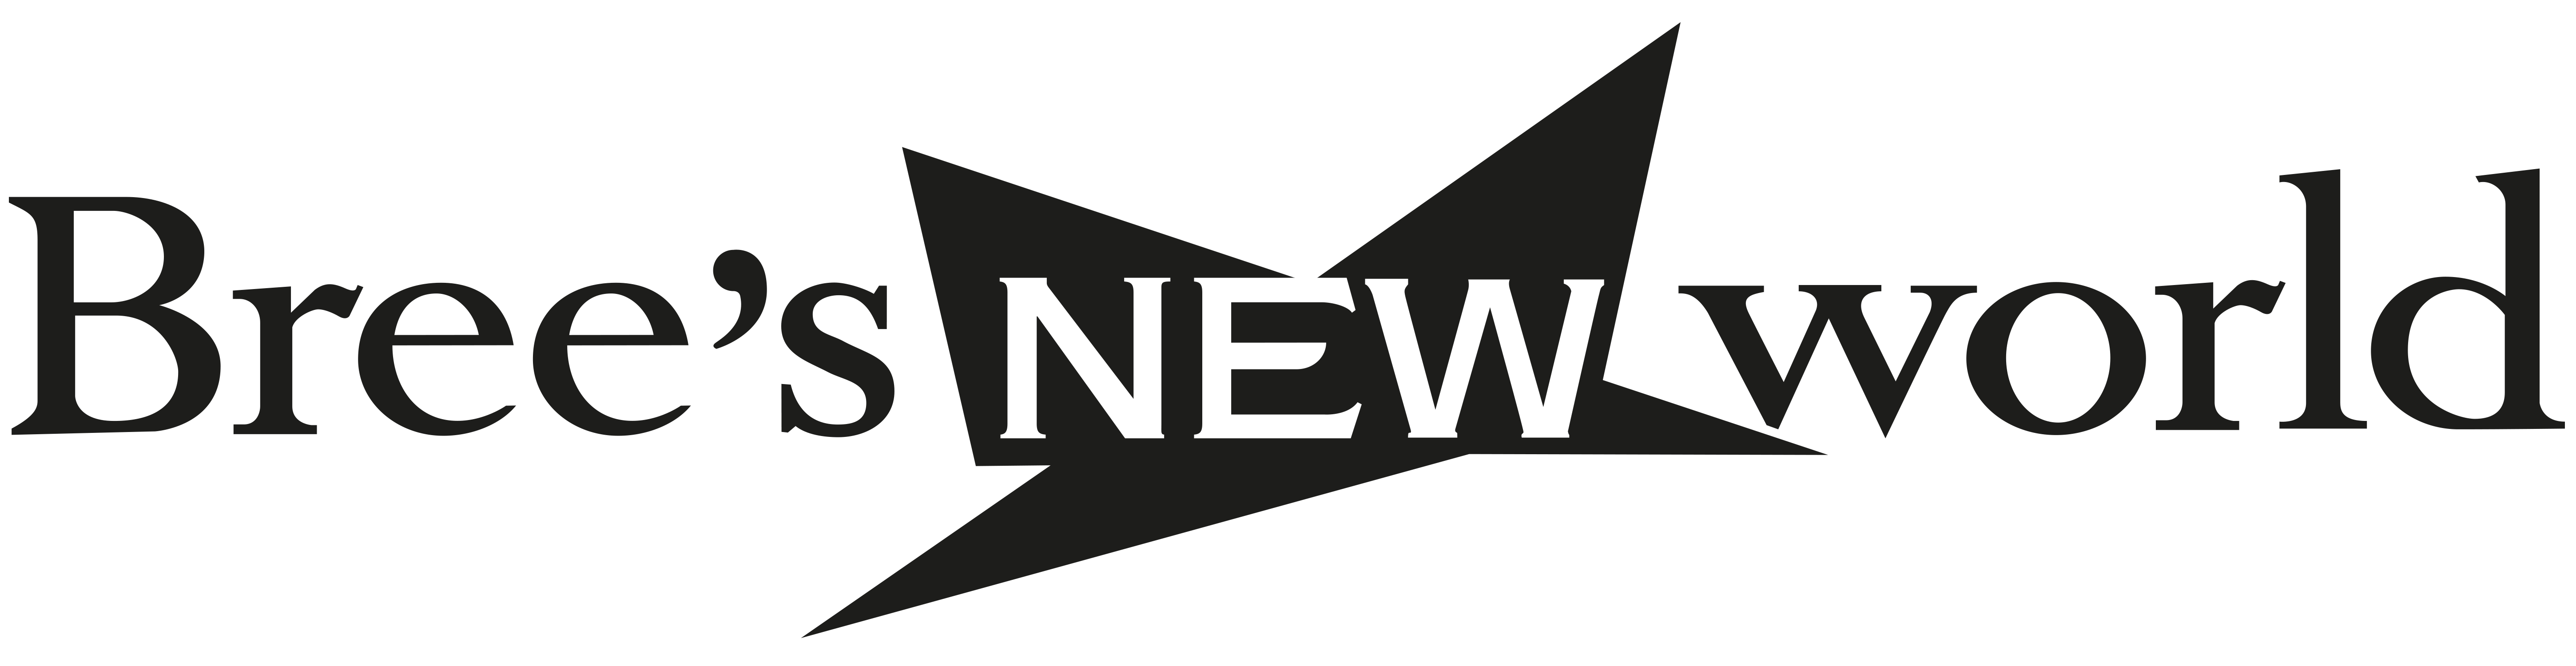 breesnewworld-logo-transparant-zwart-wit-logo.png